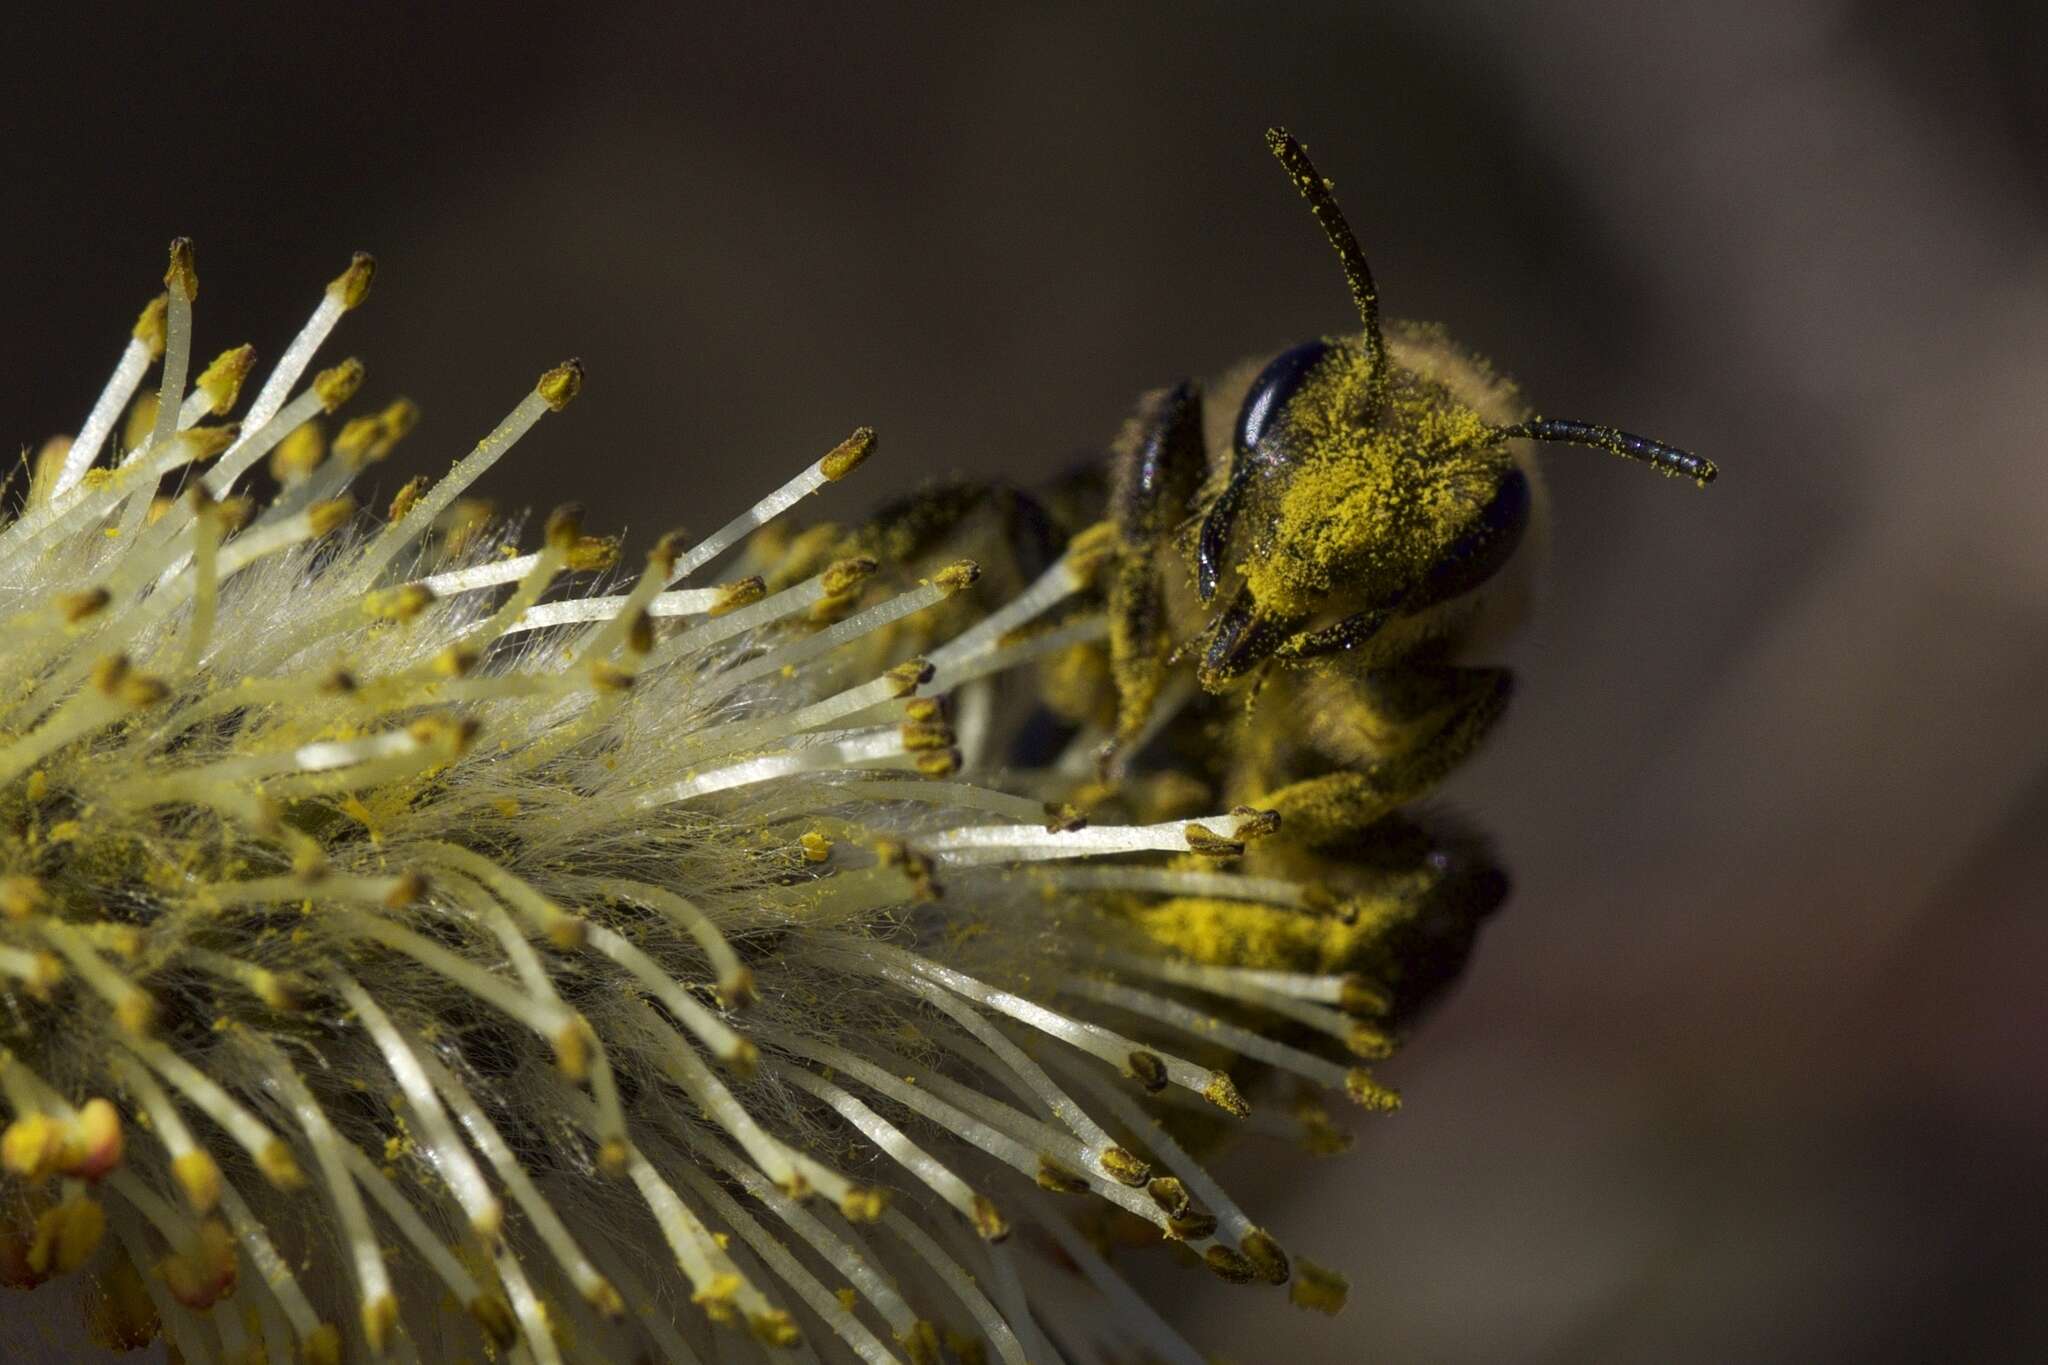 Image of Neighborly Andrena